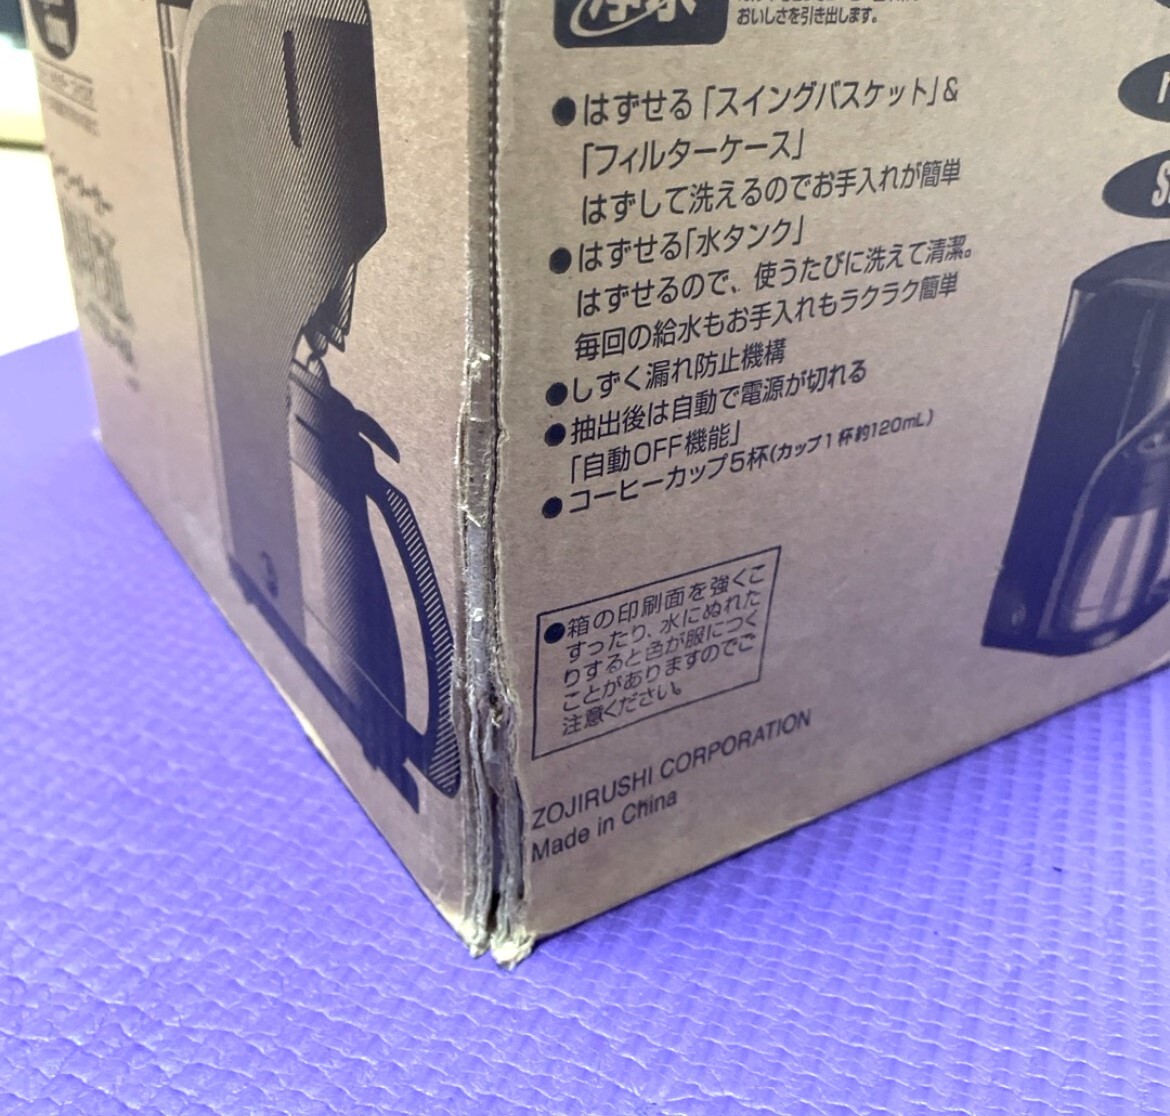 *1 jpy ~ [ new goods unused ] Zojirushi coffee maker EC-KT50-RA red 